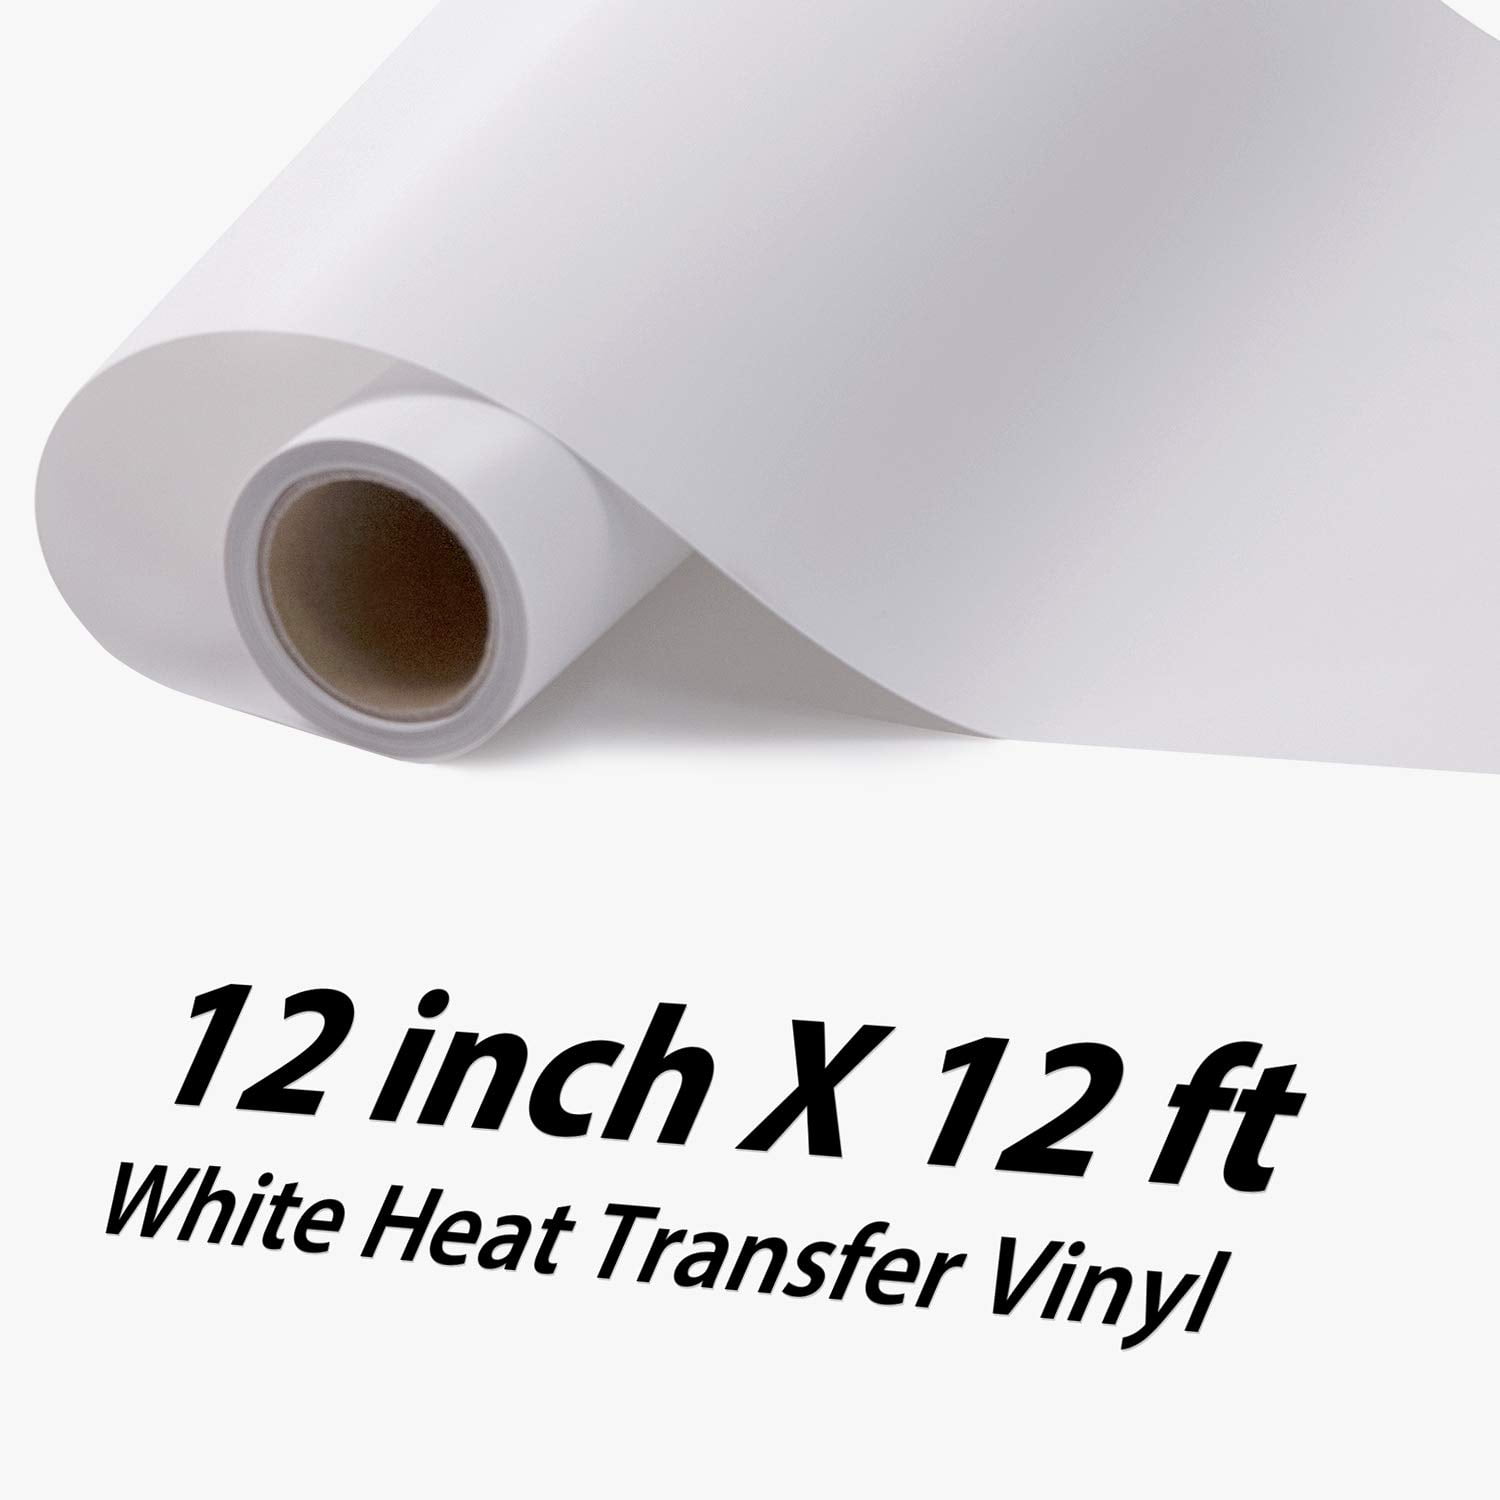 CAREGY Heat Transfer Vinyl White Iron on Vinyl-12x 45Ft HTV Vinyl Roll  Easy to Cut & Weed for Heat Vinyl Design